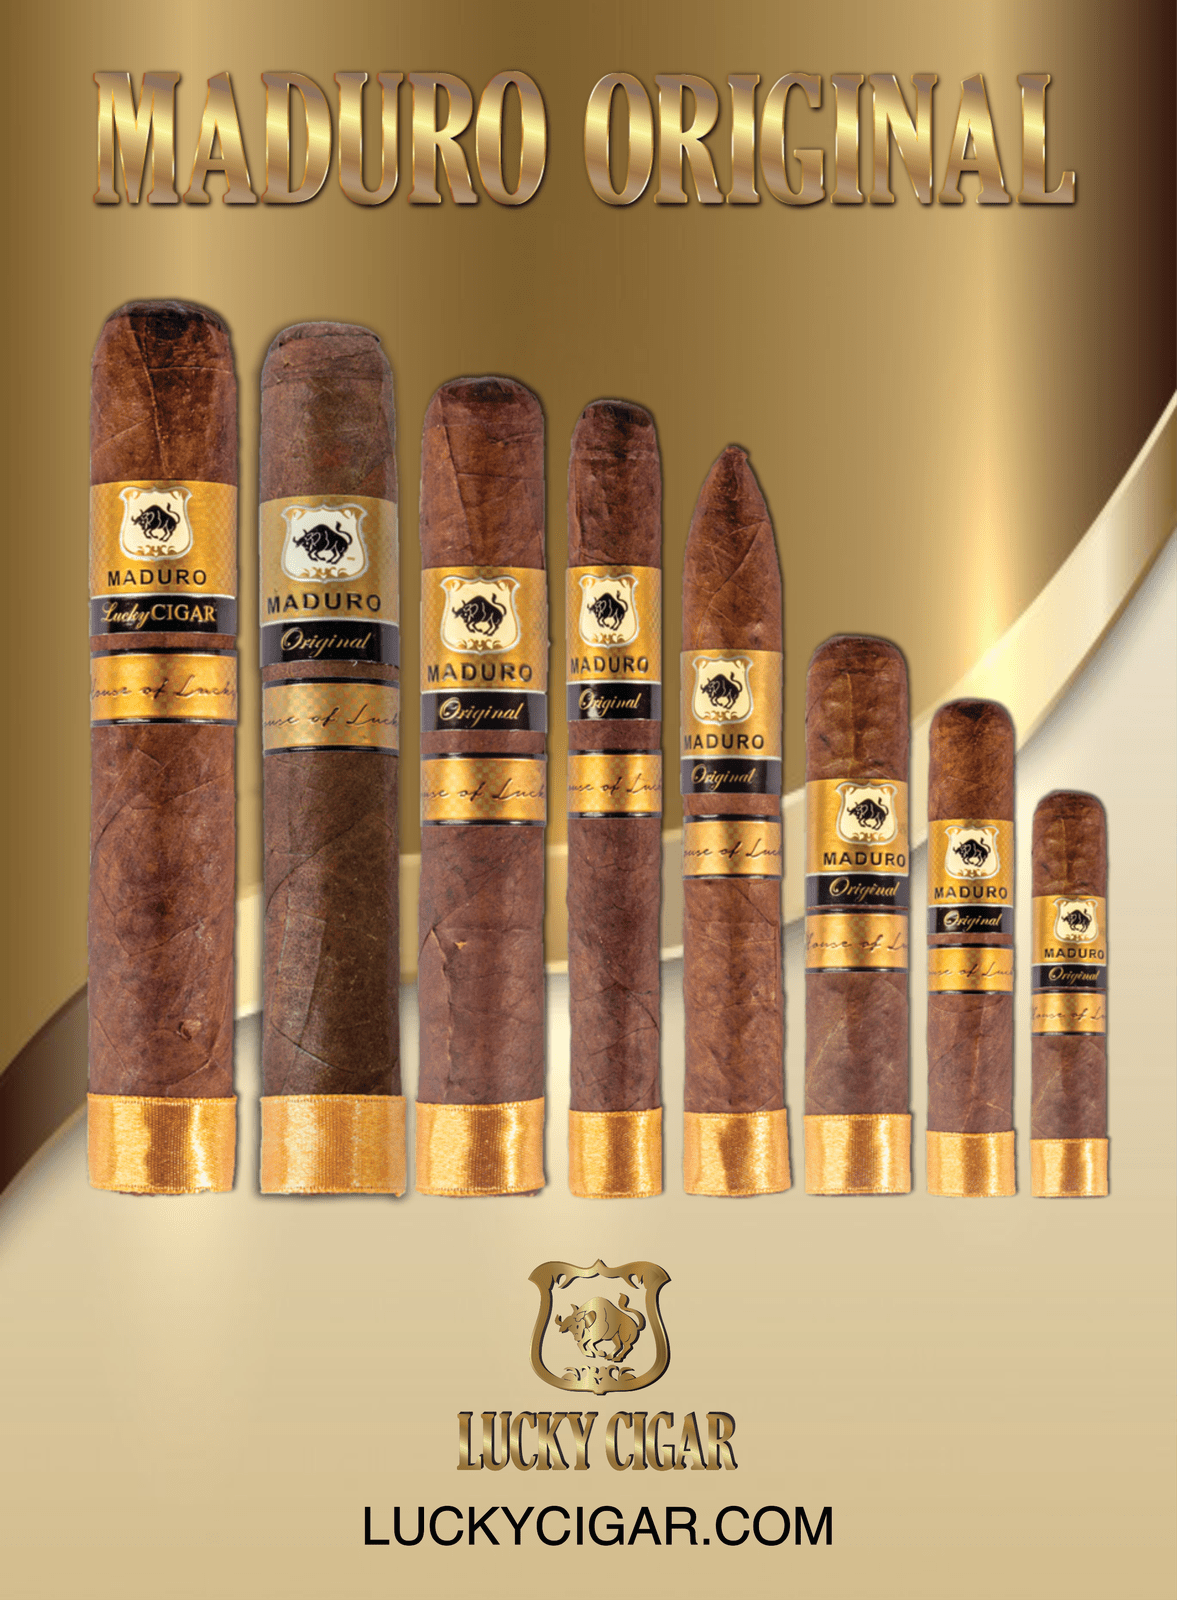 Sampler Sets: 7 Maduro Original Cigar Set of Cigars